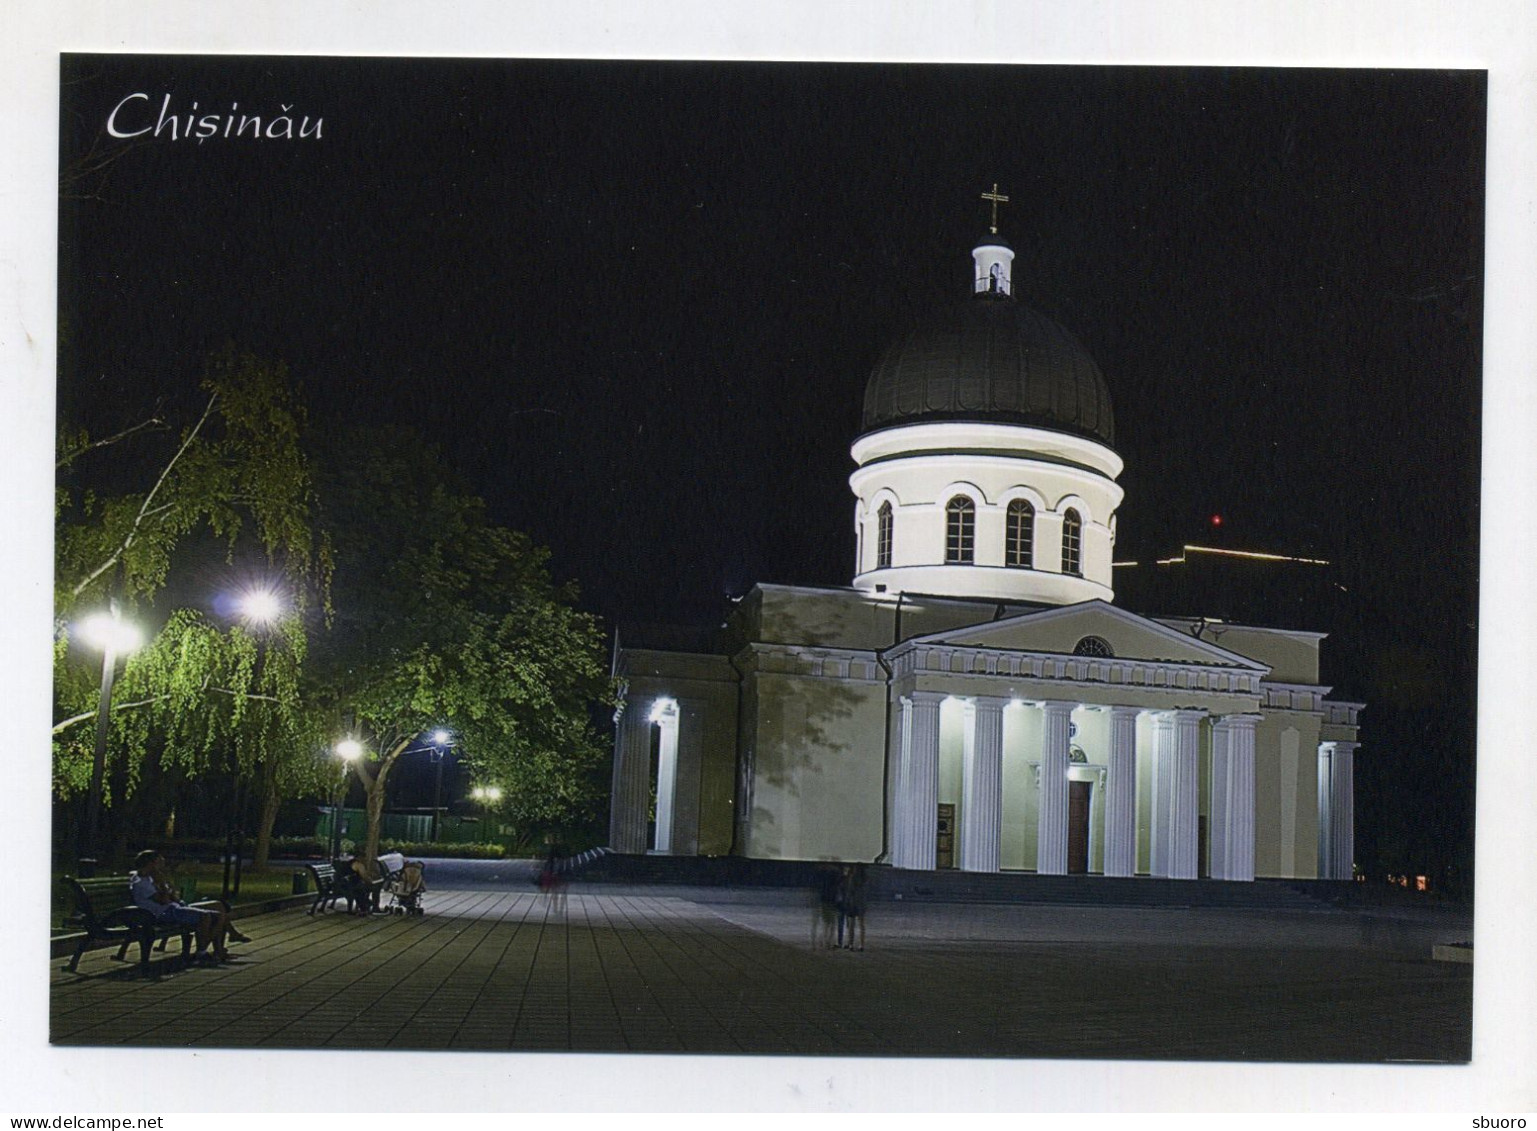 Lot de 10 CP neuves. Chisinau Kishinev capital city of Moldavie Moldova. Voir 11 photos (10 recto et 1 verso type)